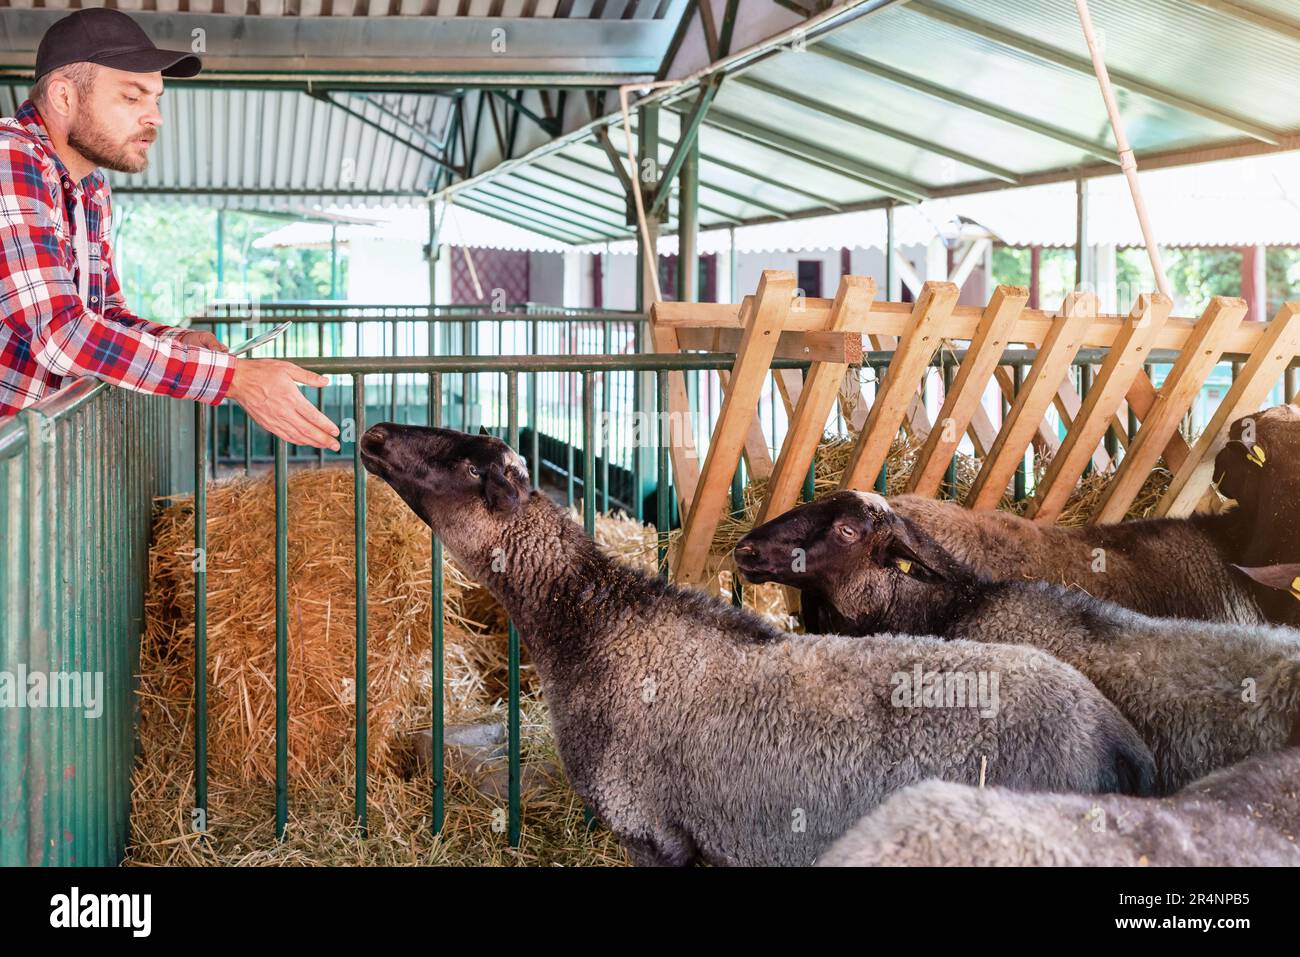 Livestock breeder and sheep in paddock at farm. Stock Photo